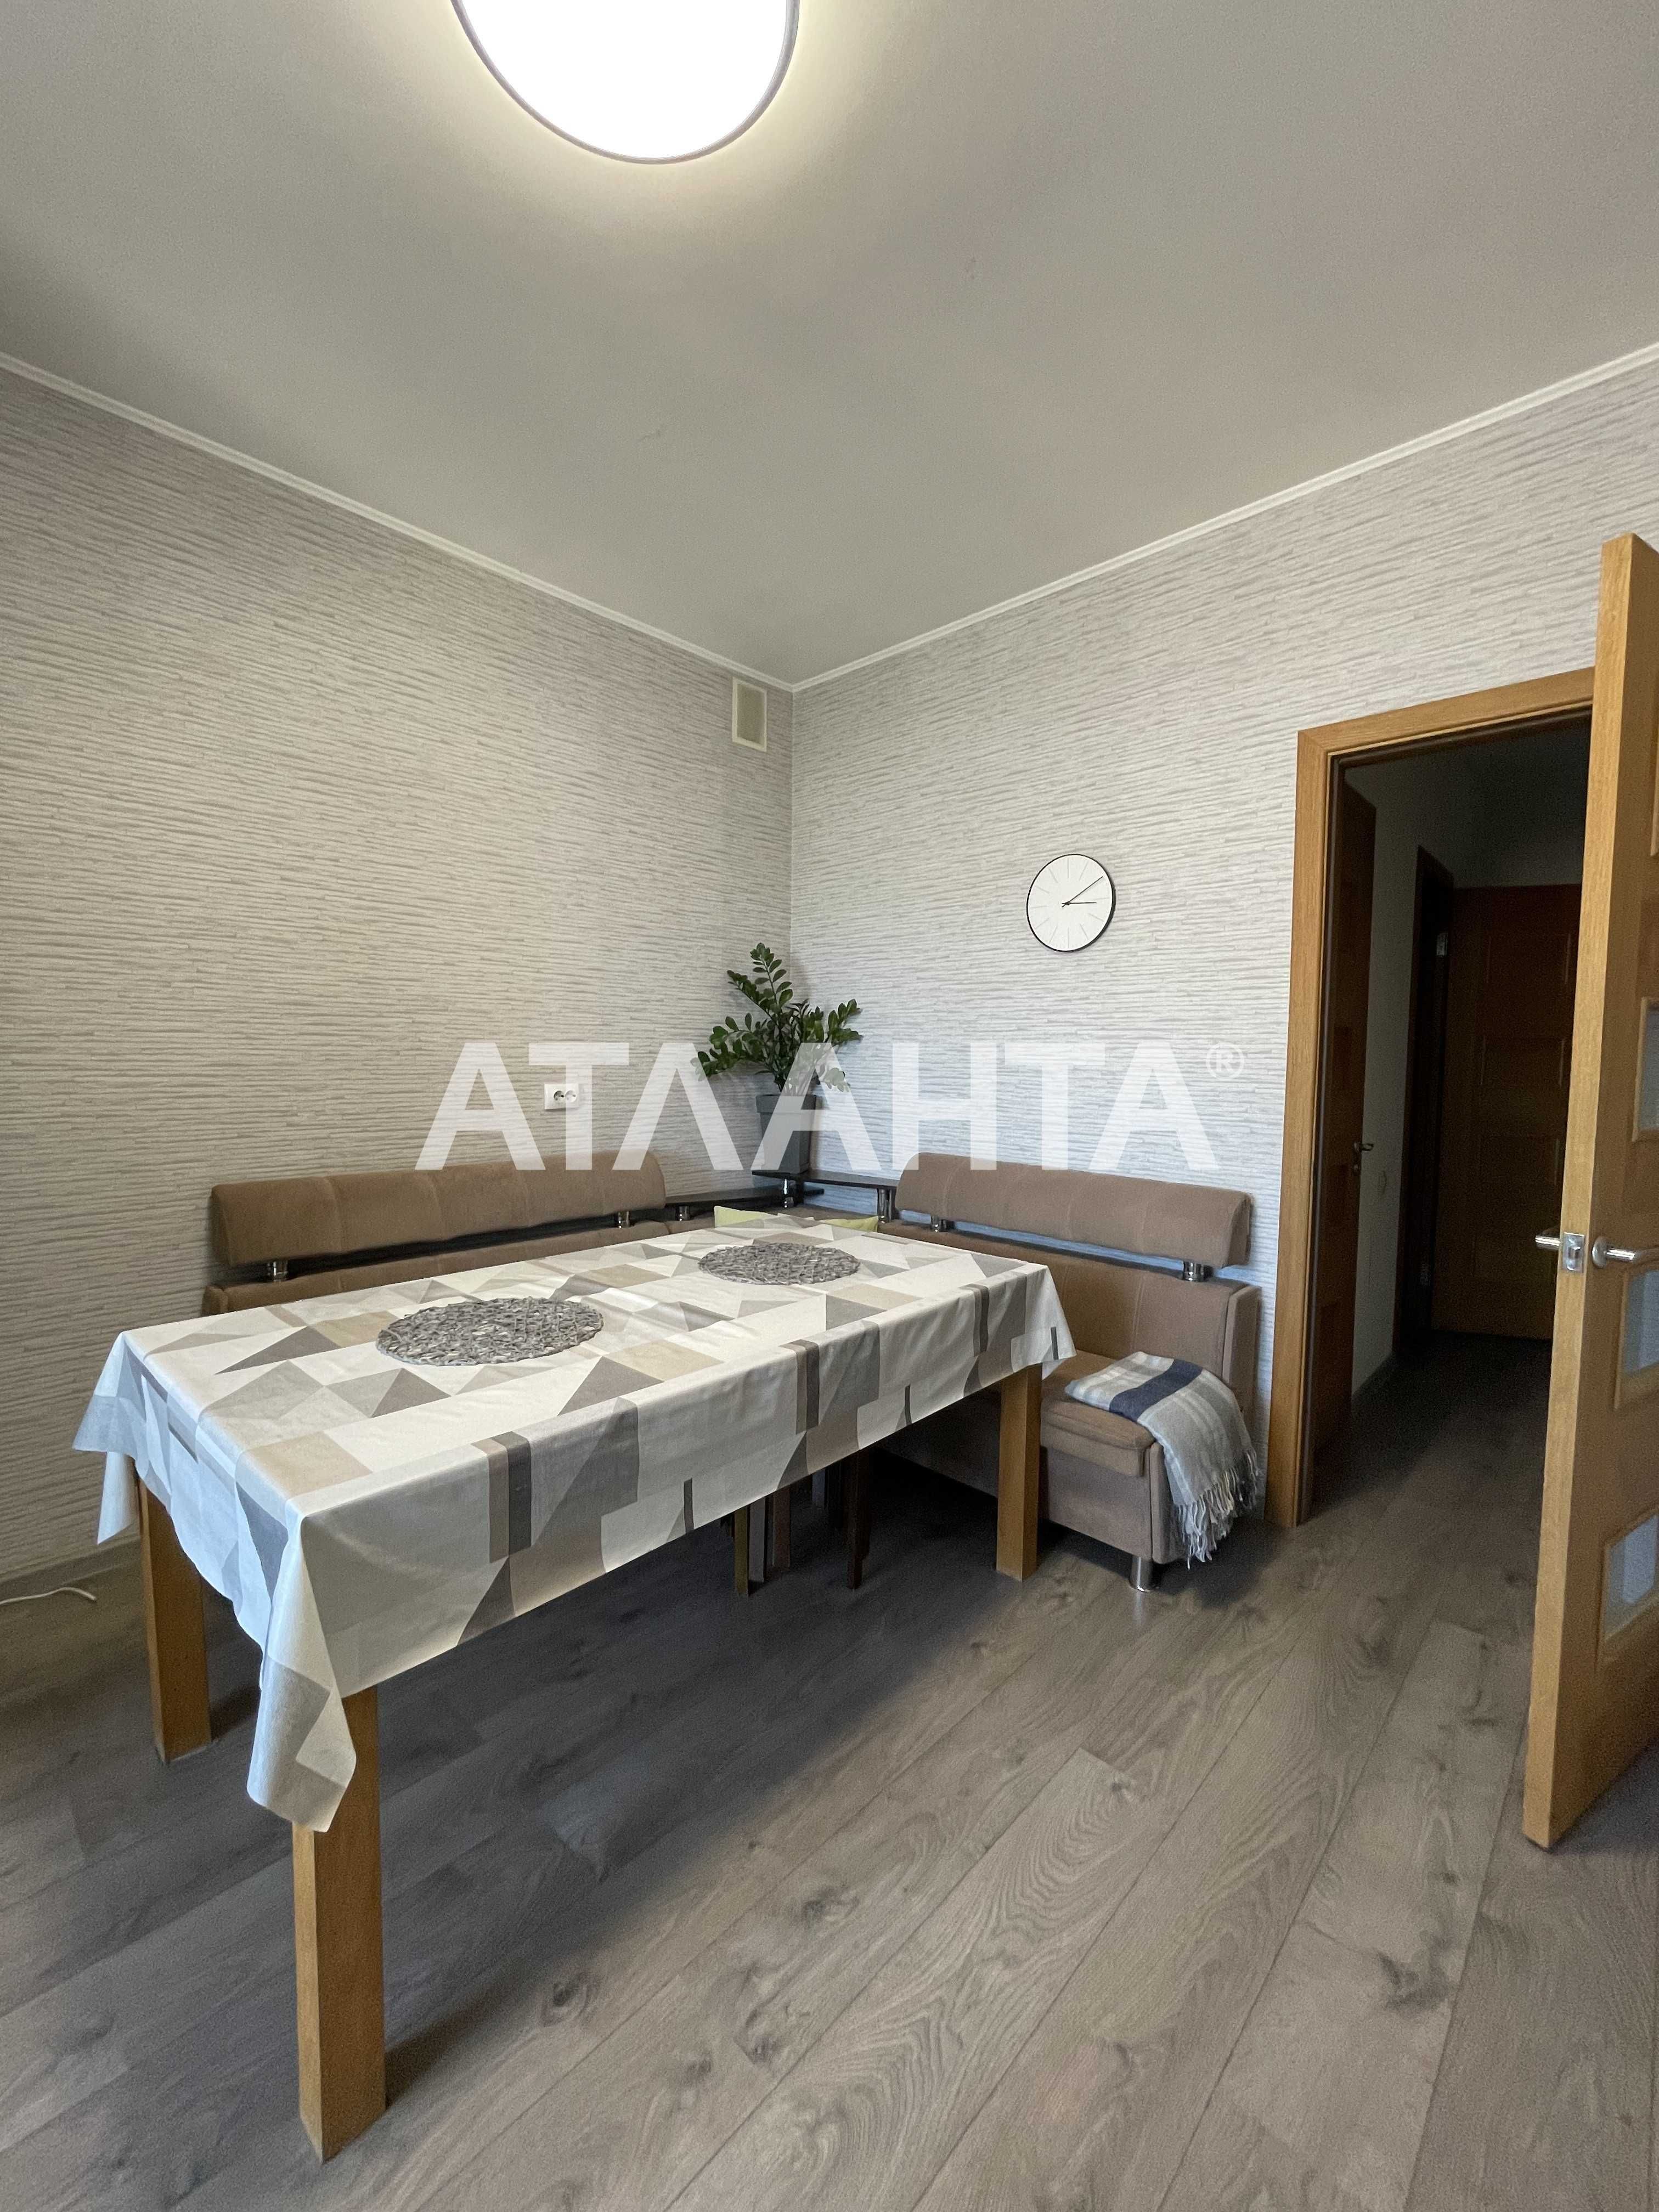 2 комнатная квартира с ремонтом в кирпичном доме на Сахарова